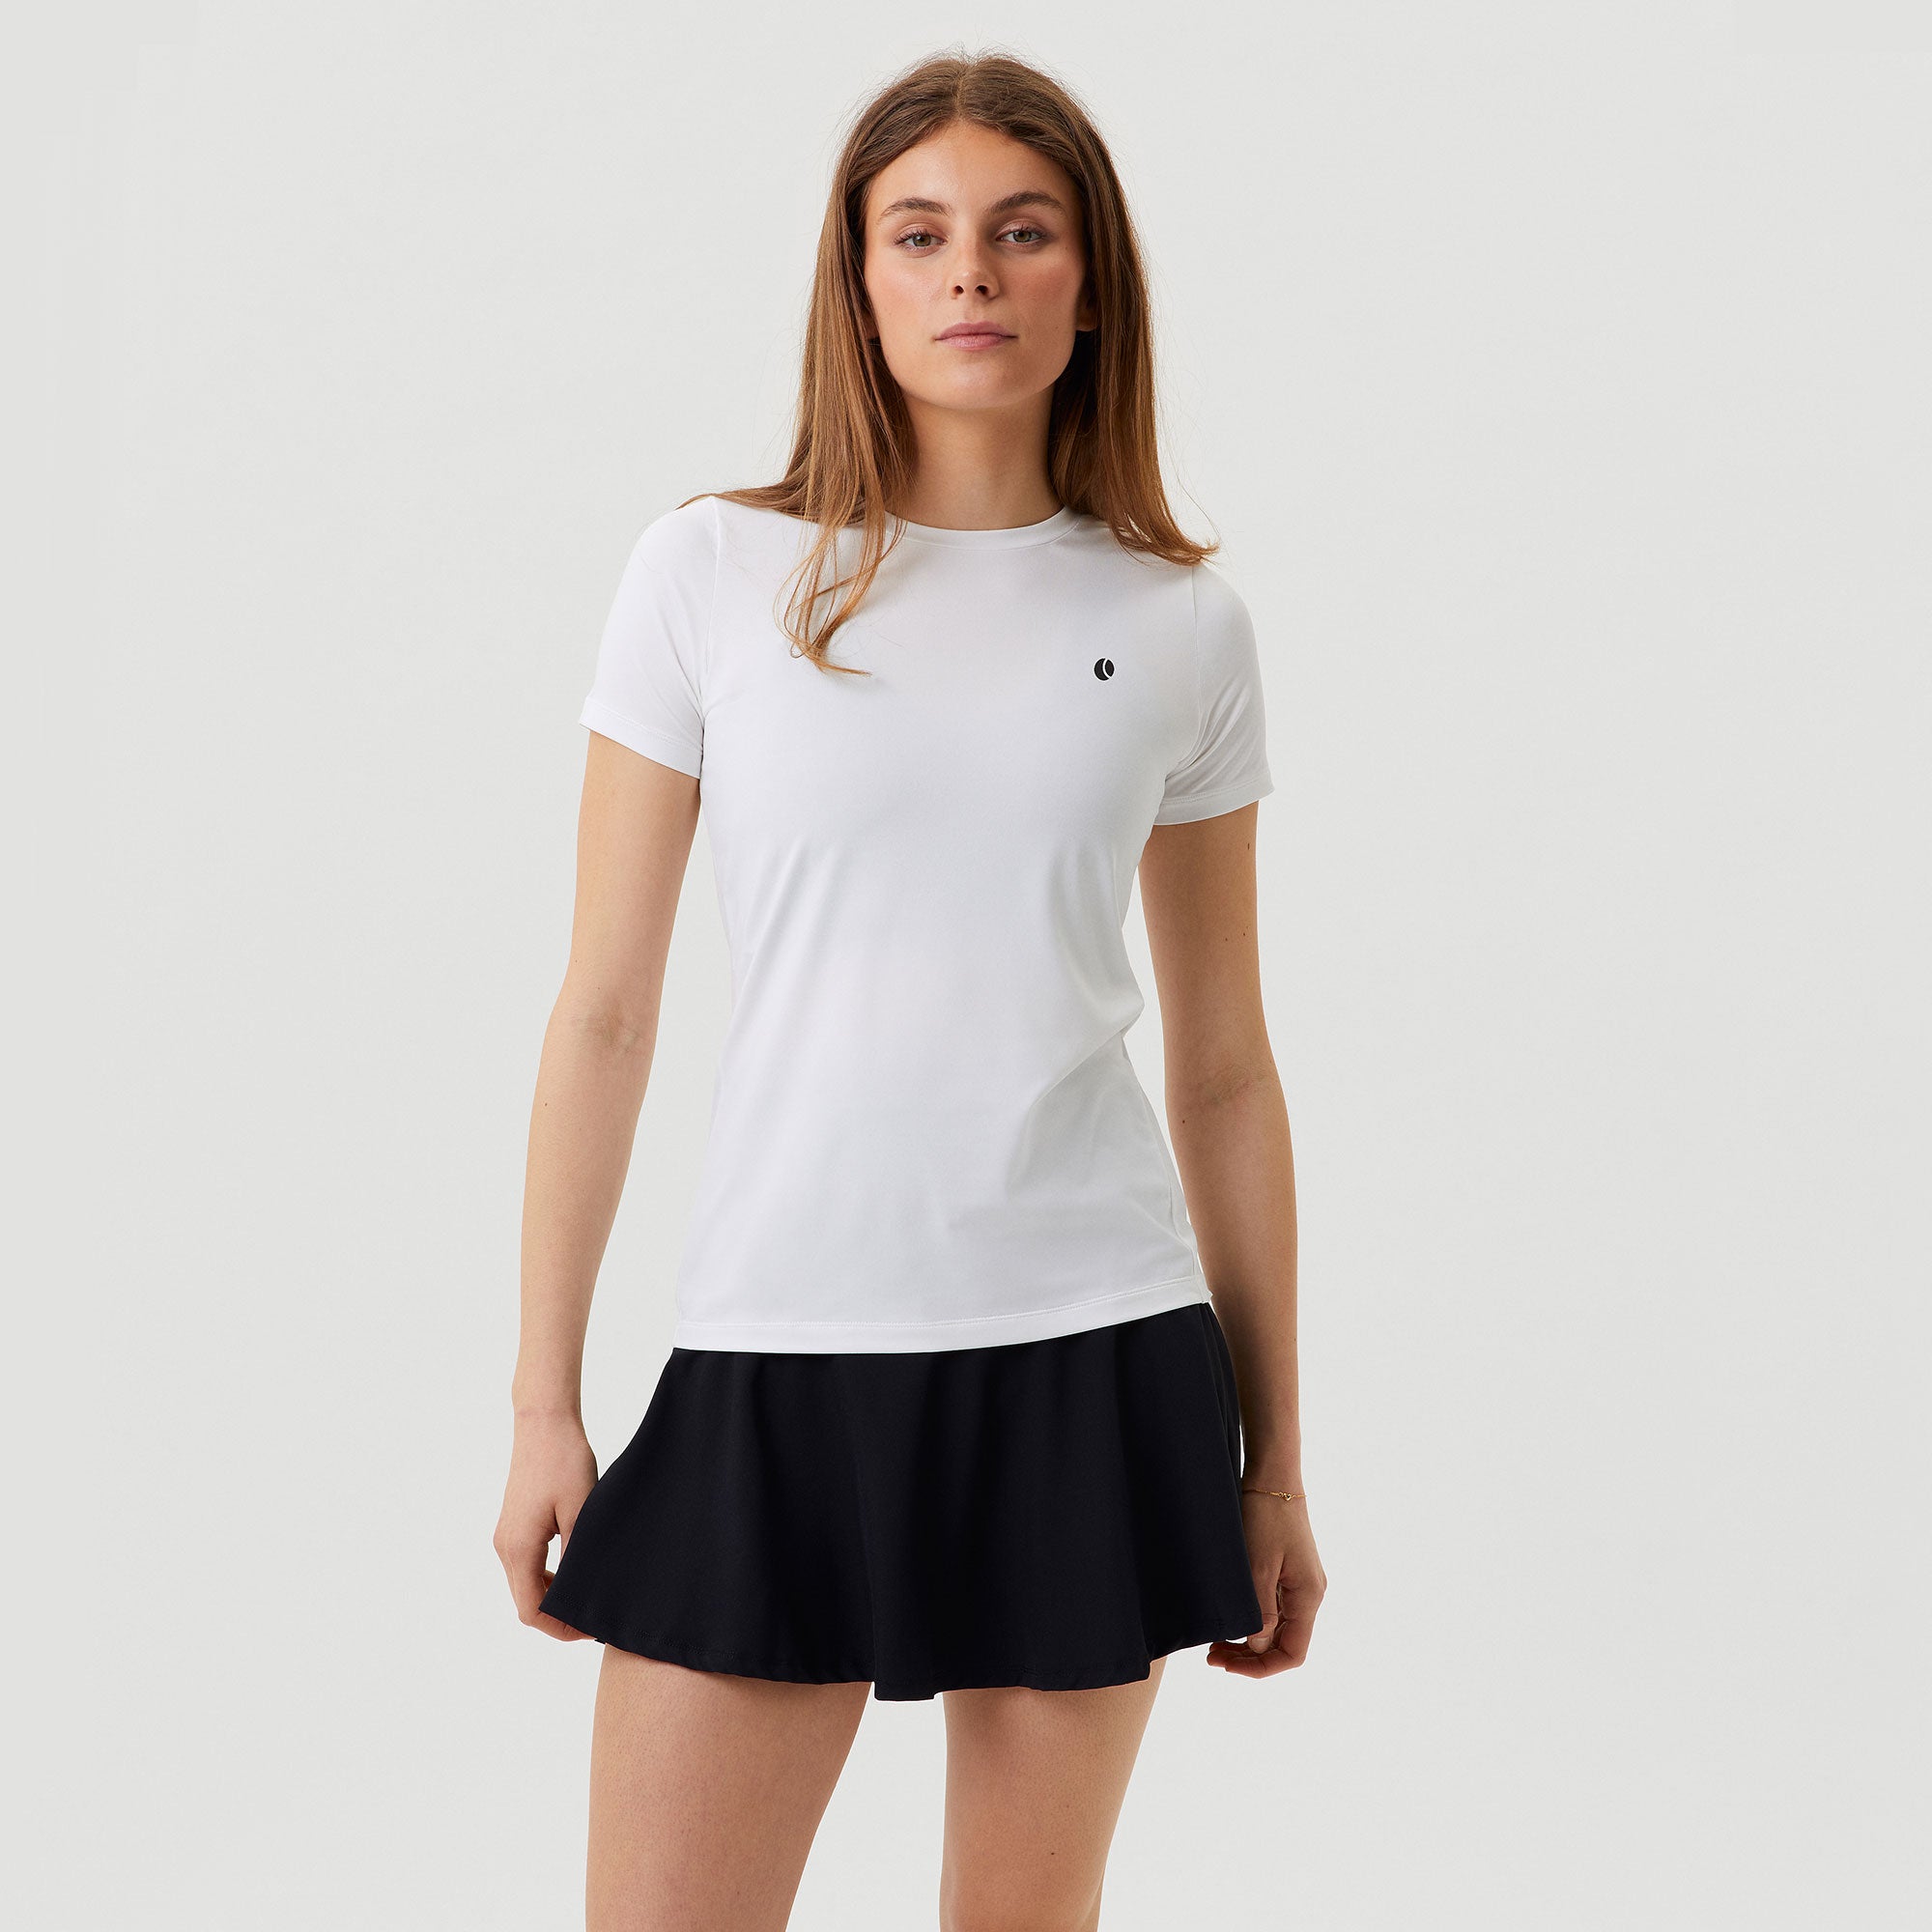 Björn Borg Ace Women's Slim Tennis Shirt - White (1)